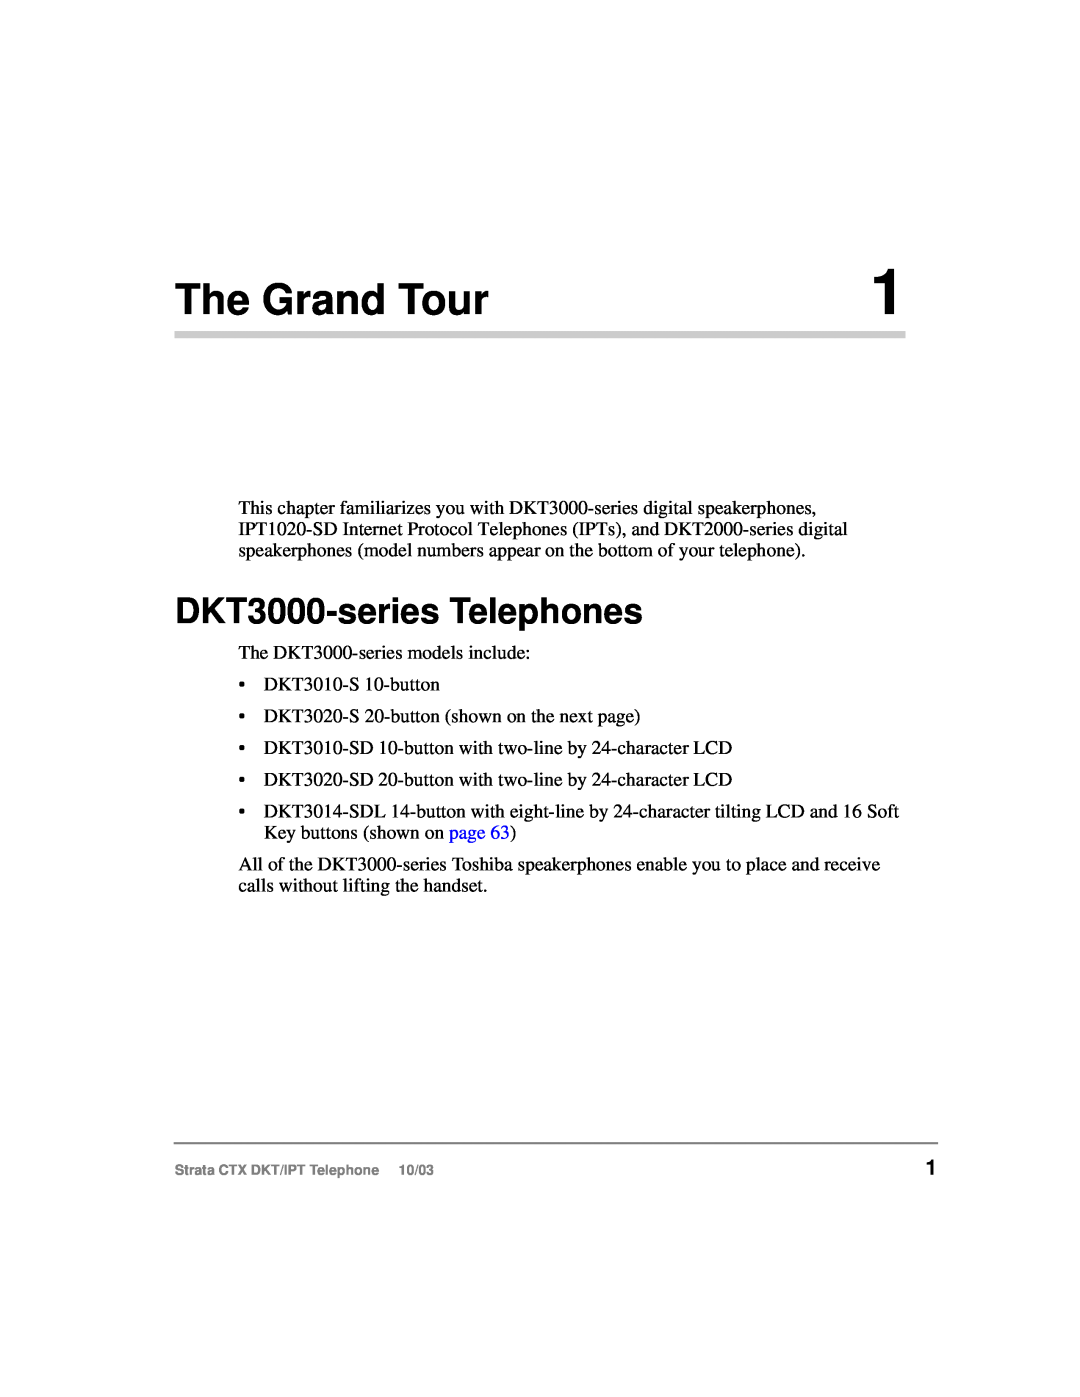 Toshiba IPT manual The Grand Tour, DKT3000-series Telephones 